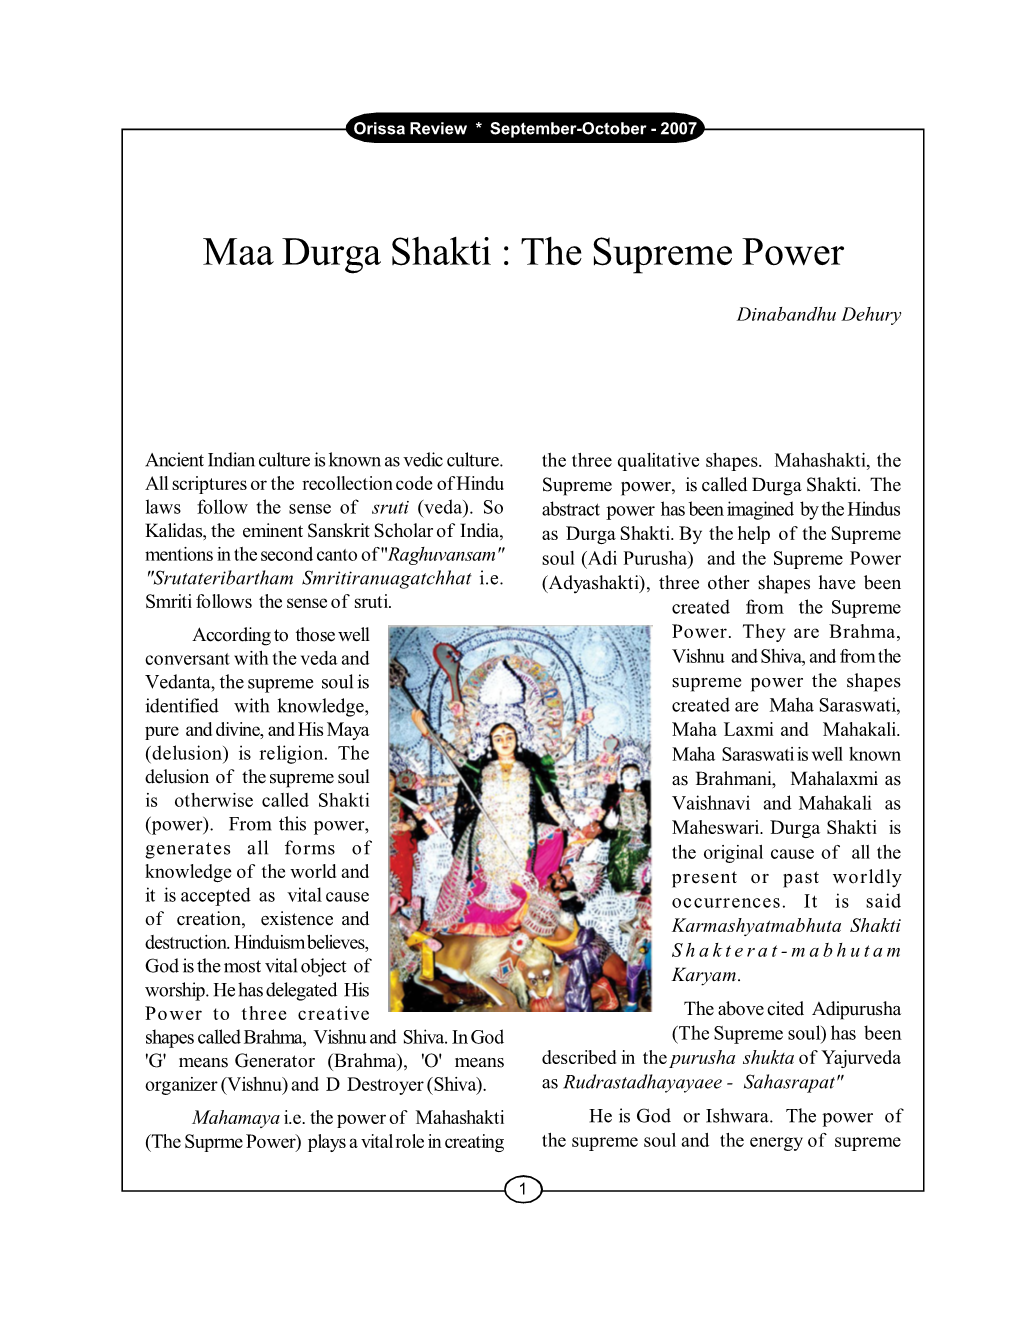 Maa Durga Shakti : the Supreme Power